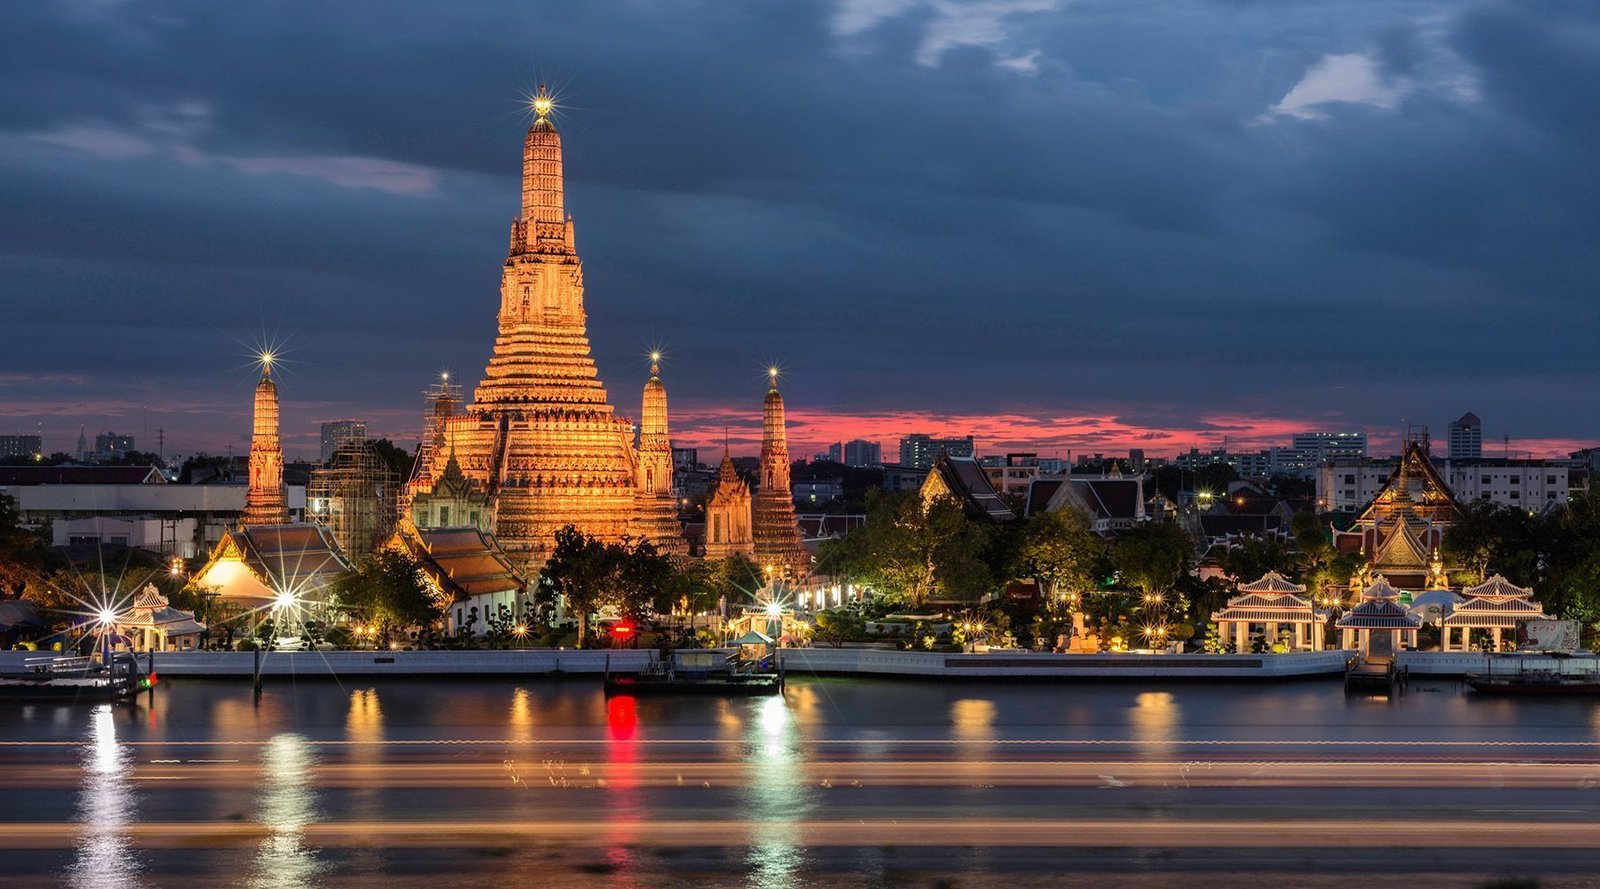 Bangkok Thailand travel Information